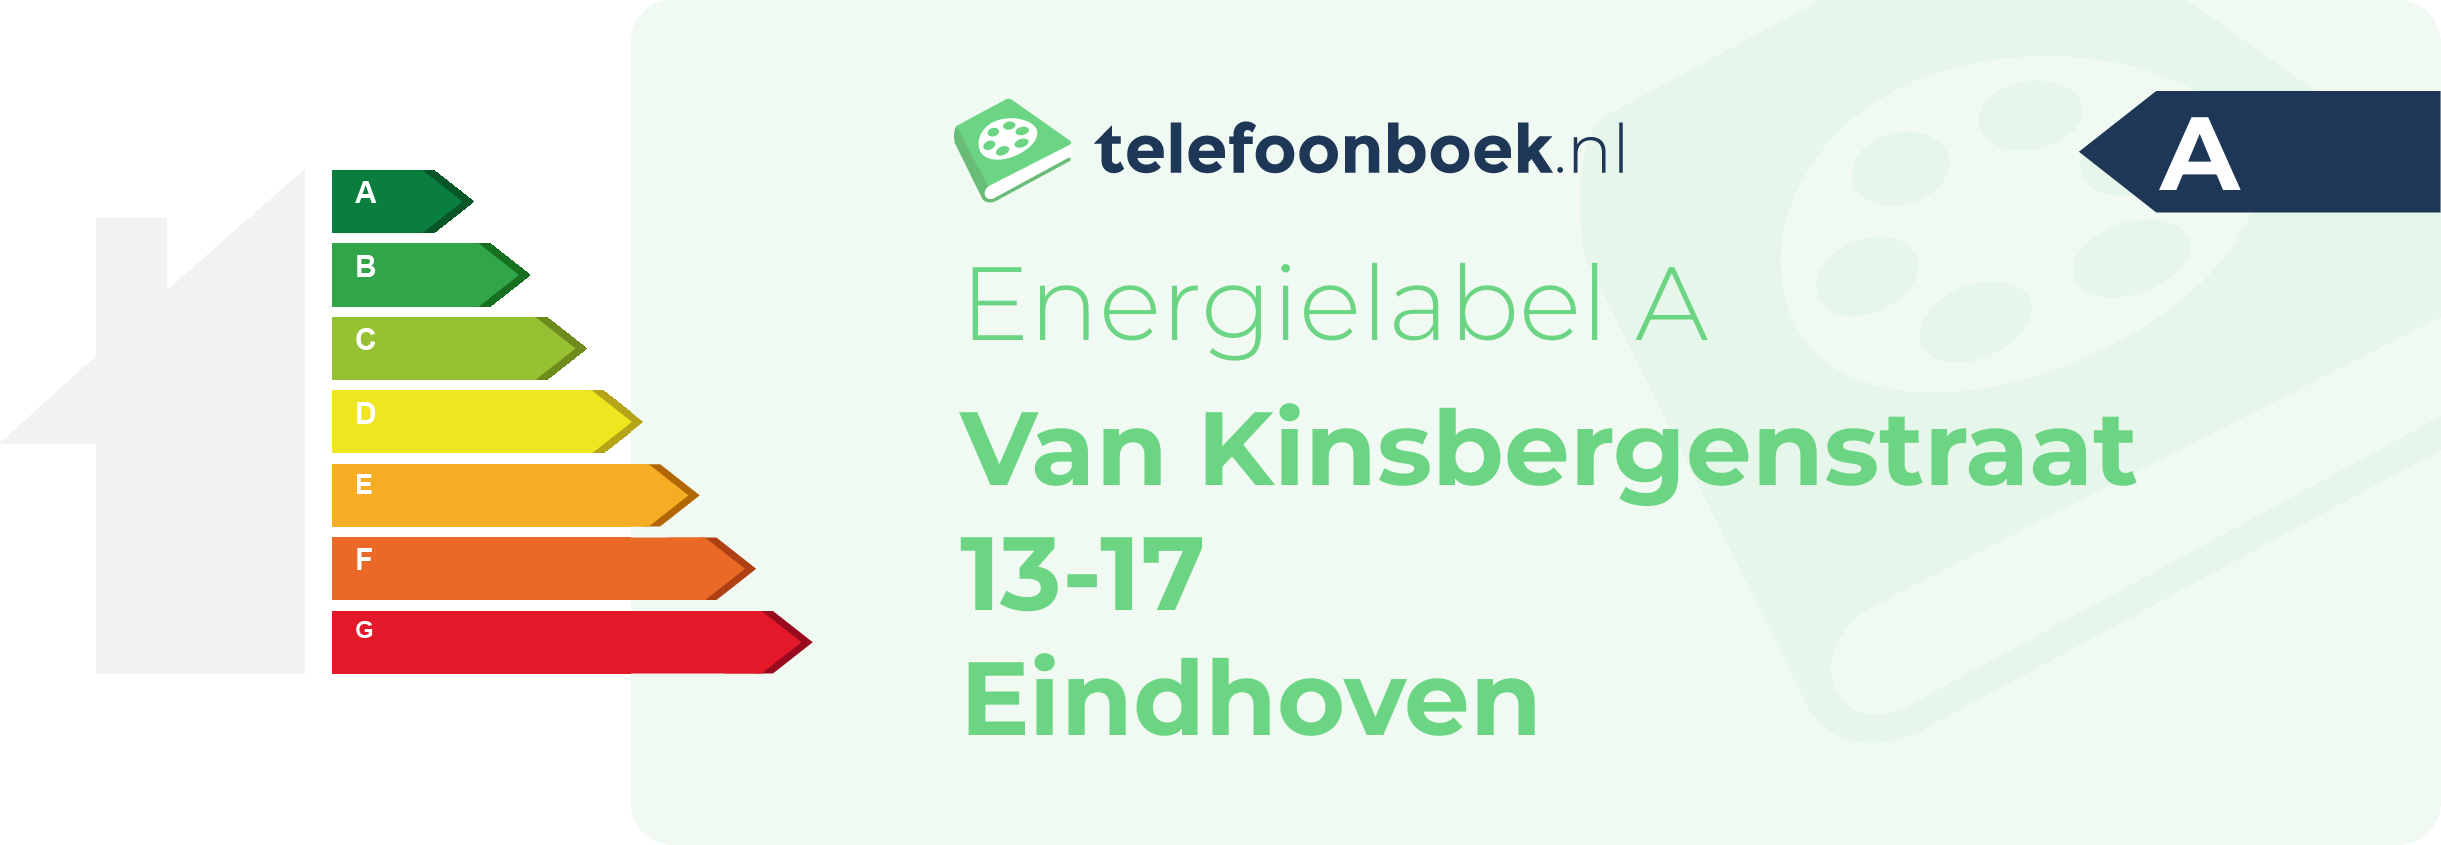 Energielabel Van Kinsbergenstraat 13-17 Eindhoven